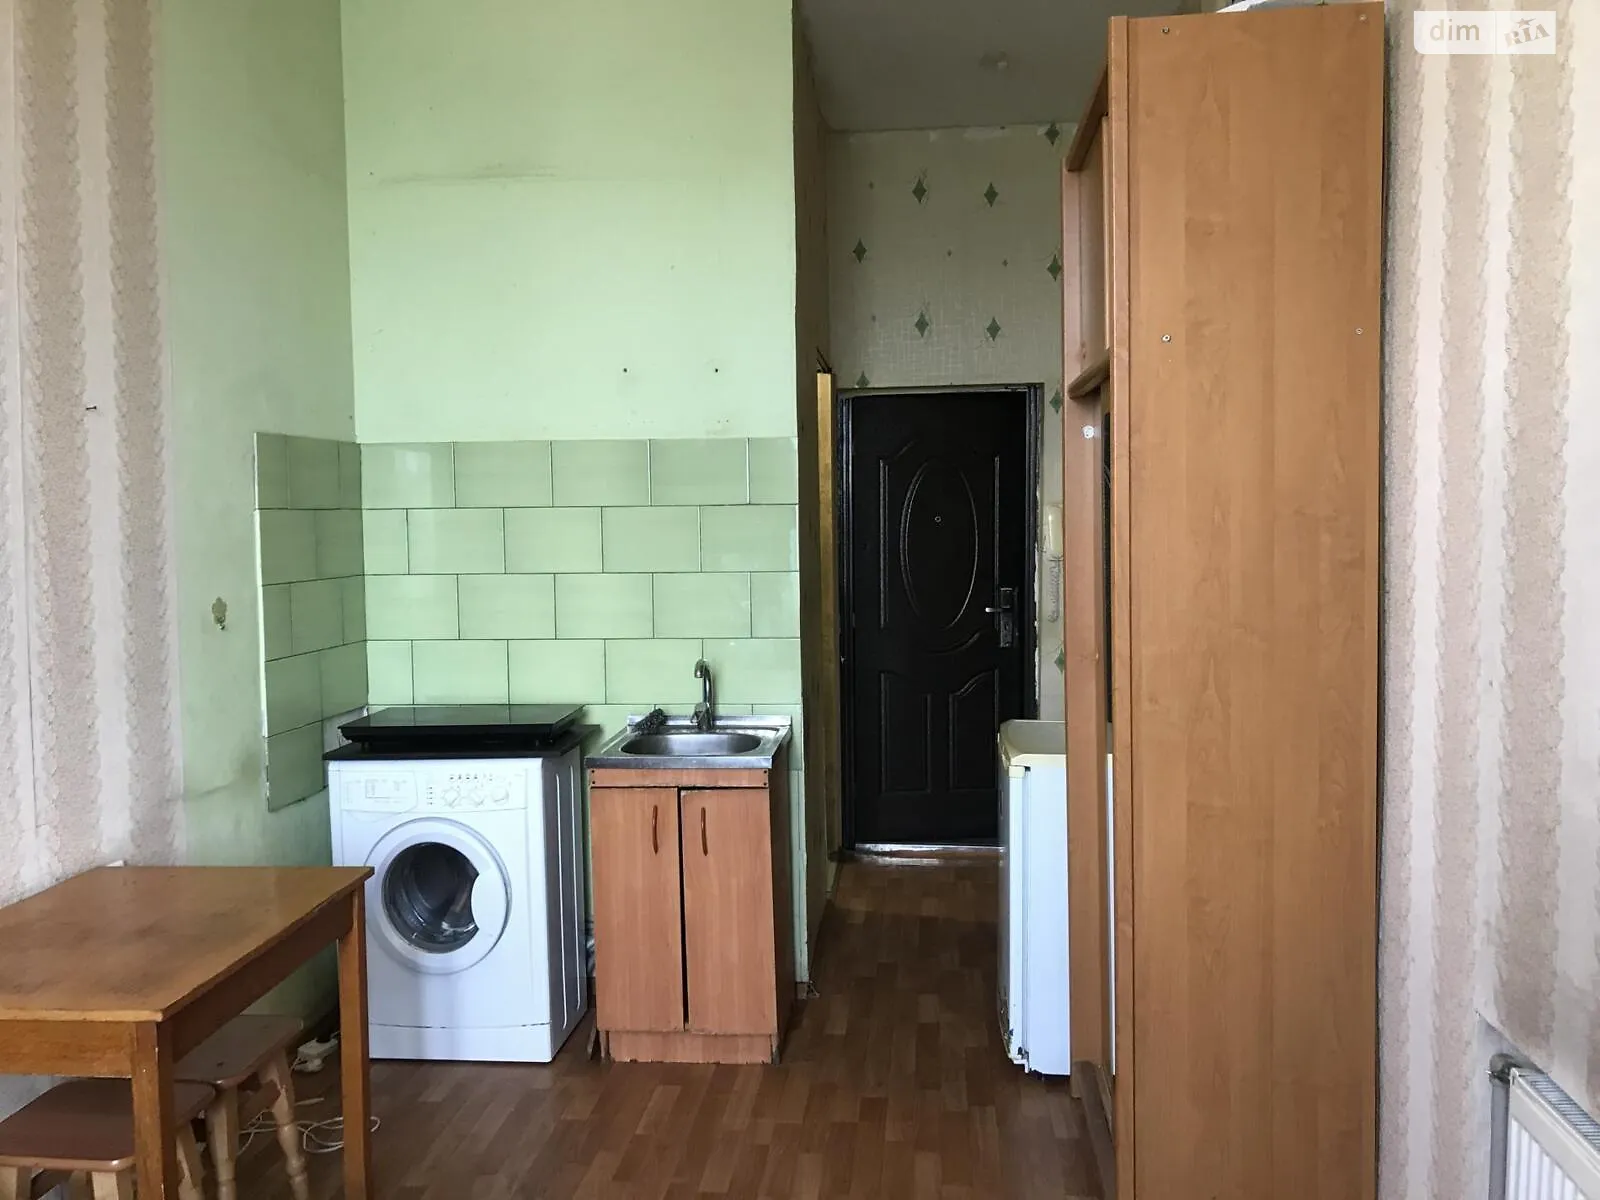 Продается комната 17 кв. м в Харькове - фото 2